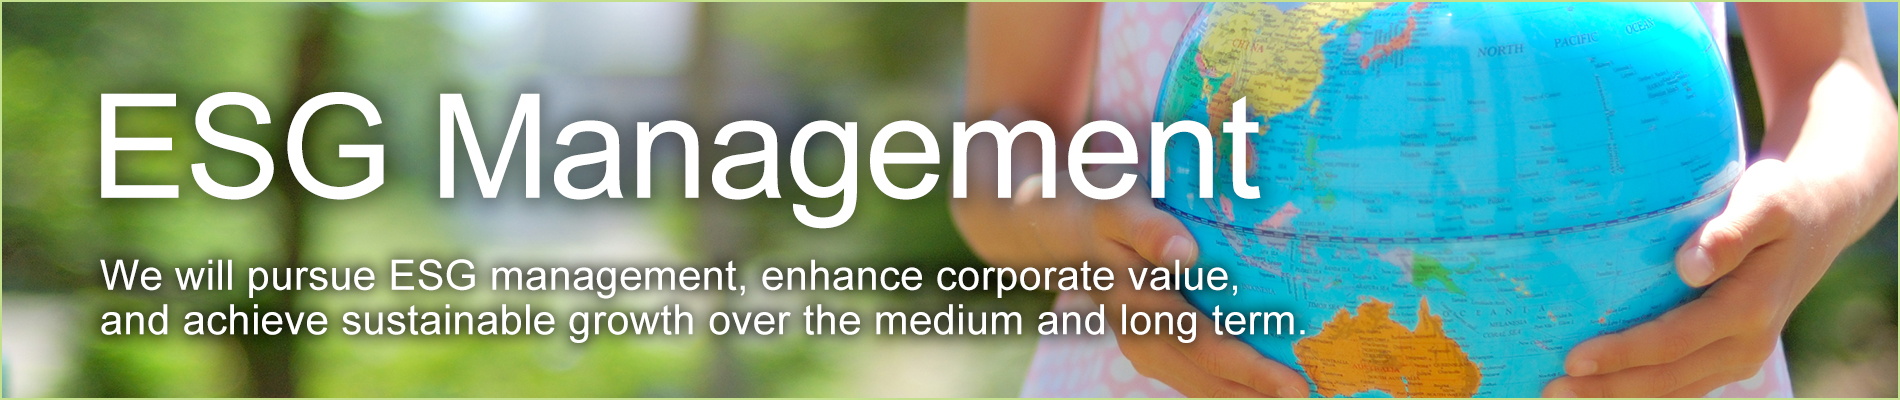 ESG Management banner